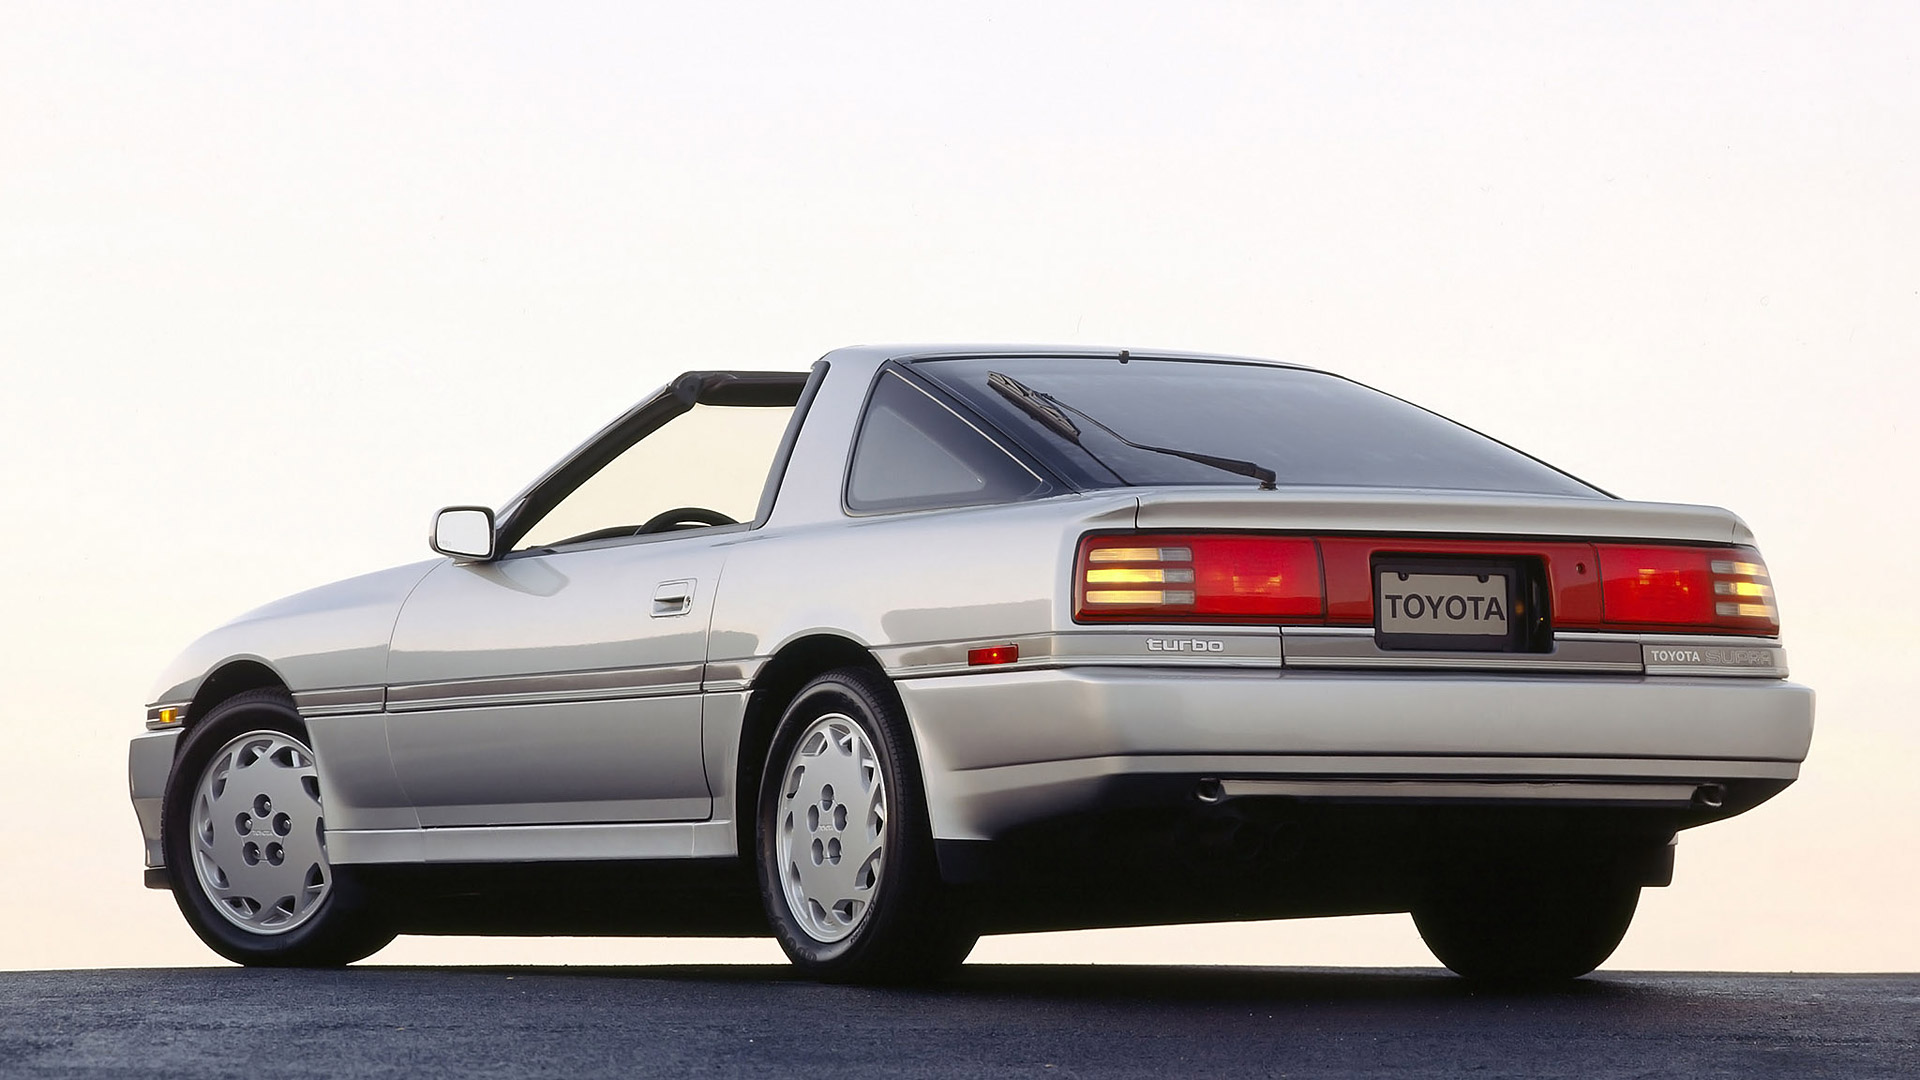  1989 Toyota Supra Turbo Wallpaper.